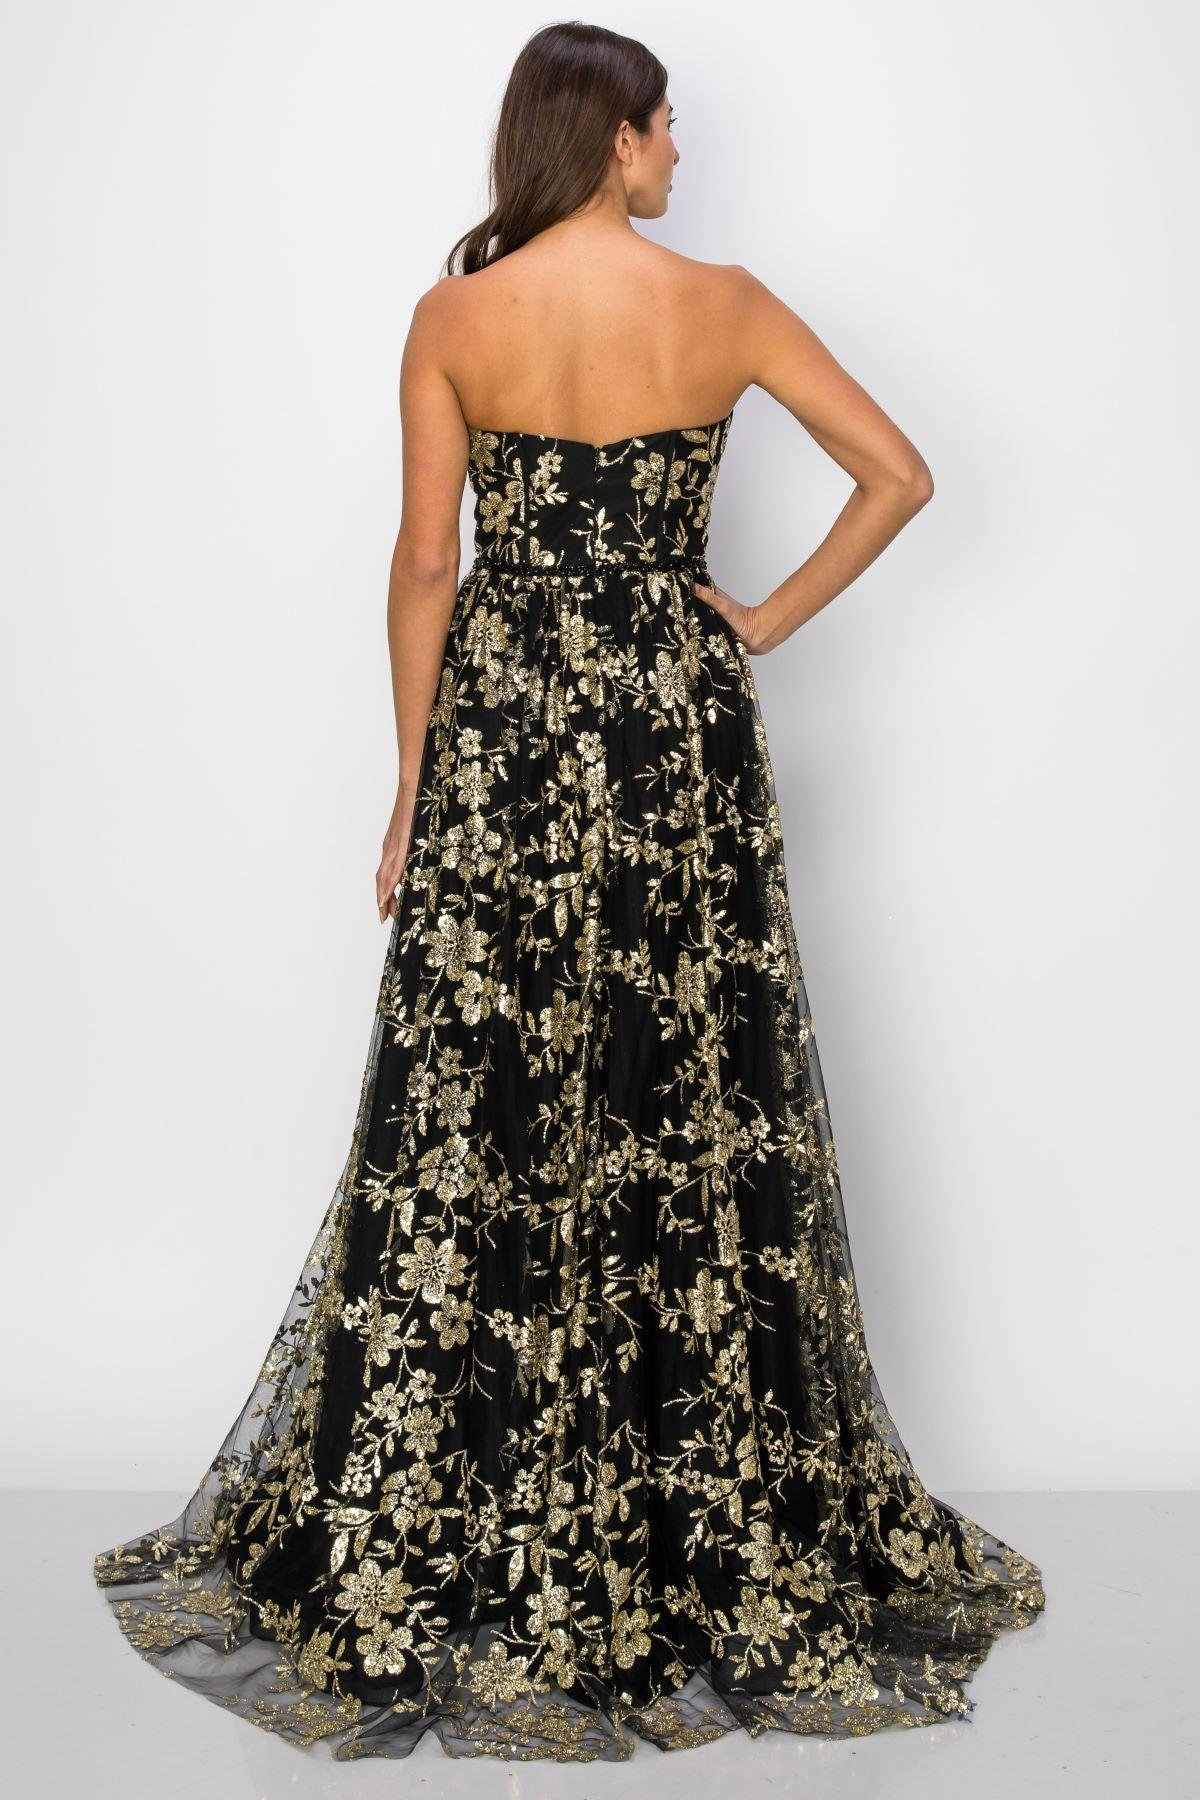 Cinderella Couture CC8043J Strapless Glittered Print A Line Gown Black